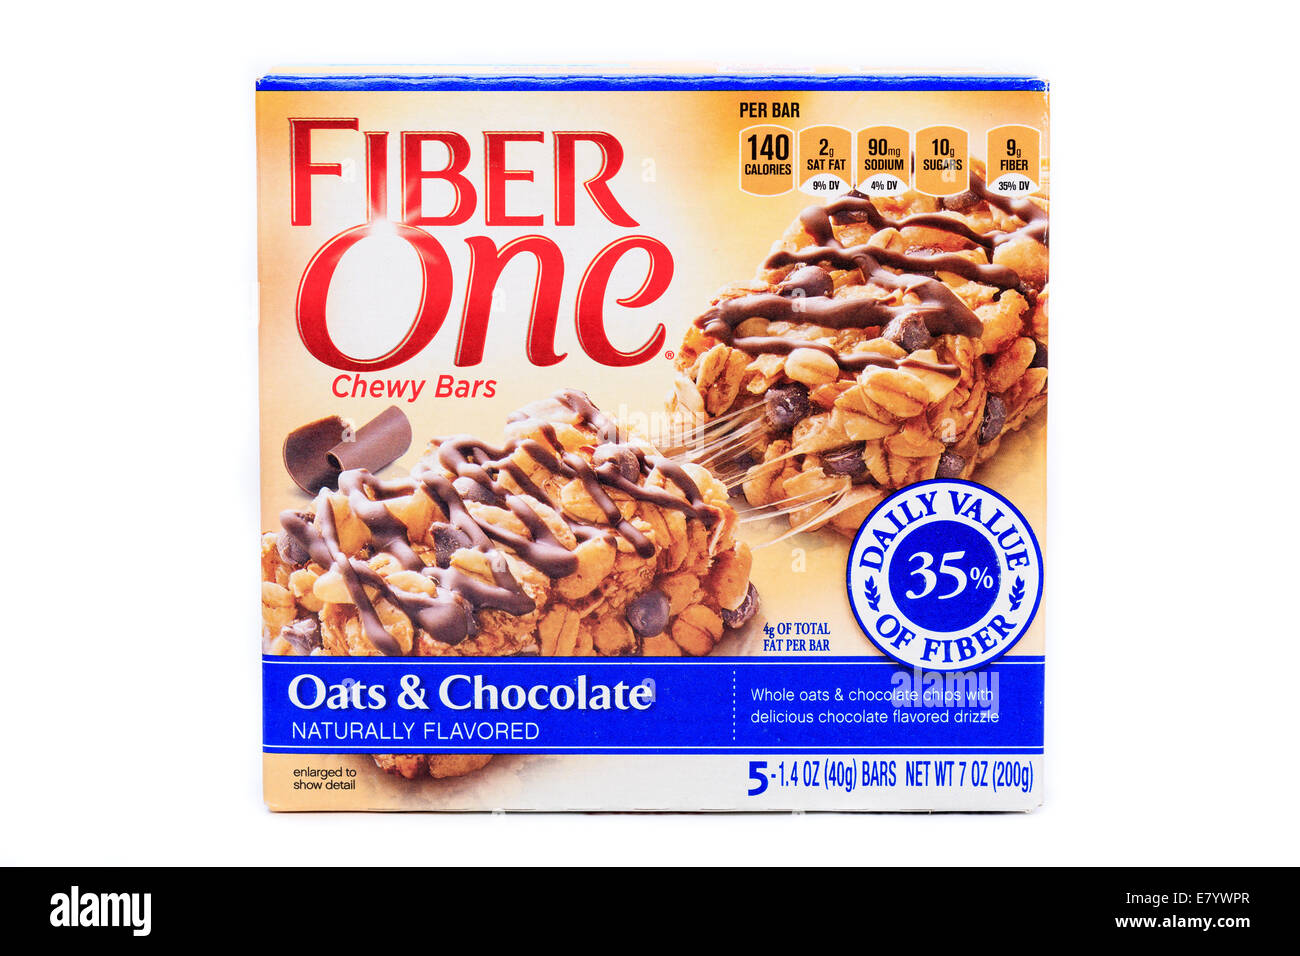 Fiber One brand Chewy Oats & Chocolate bars Stock Photo